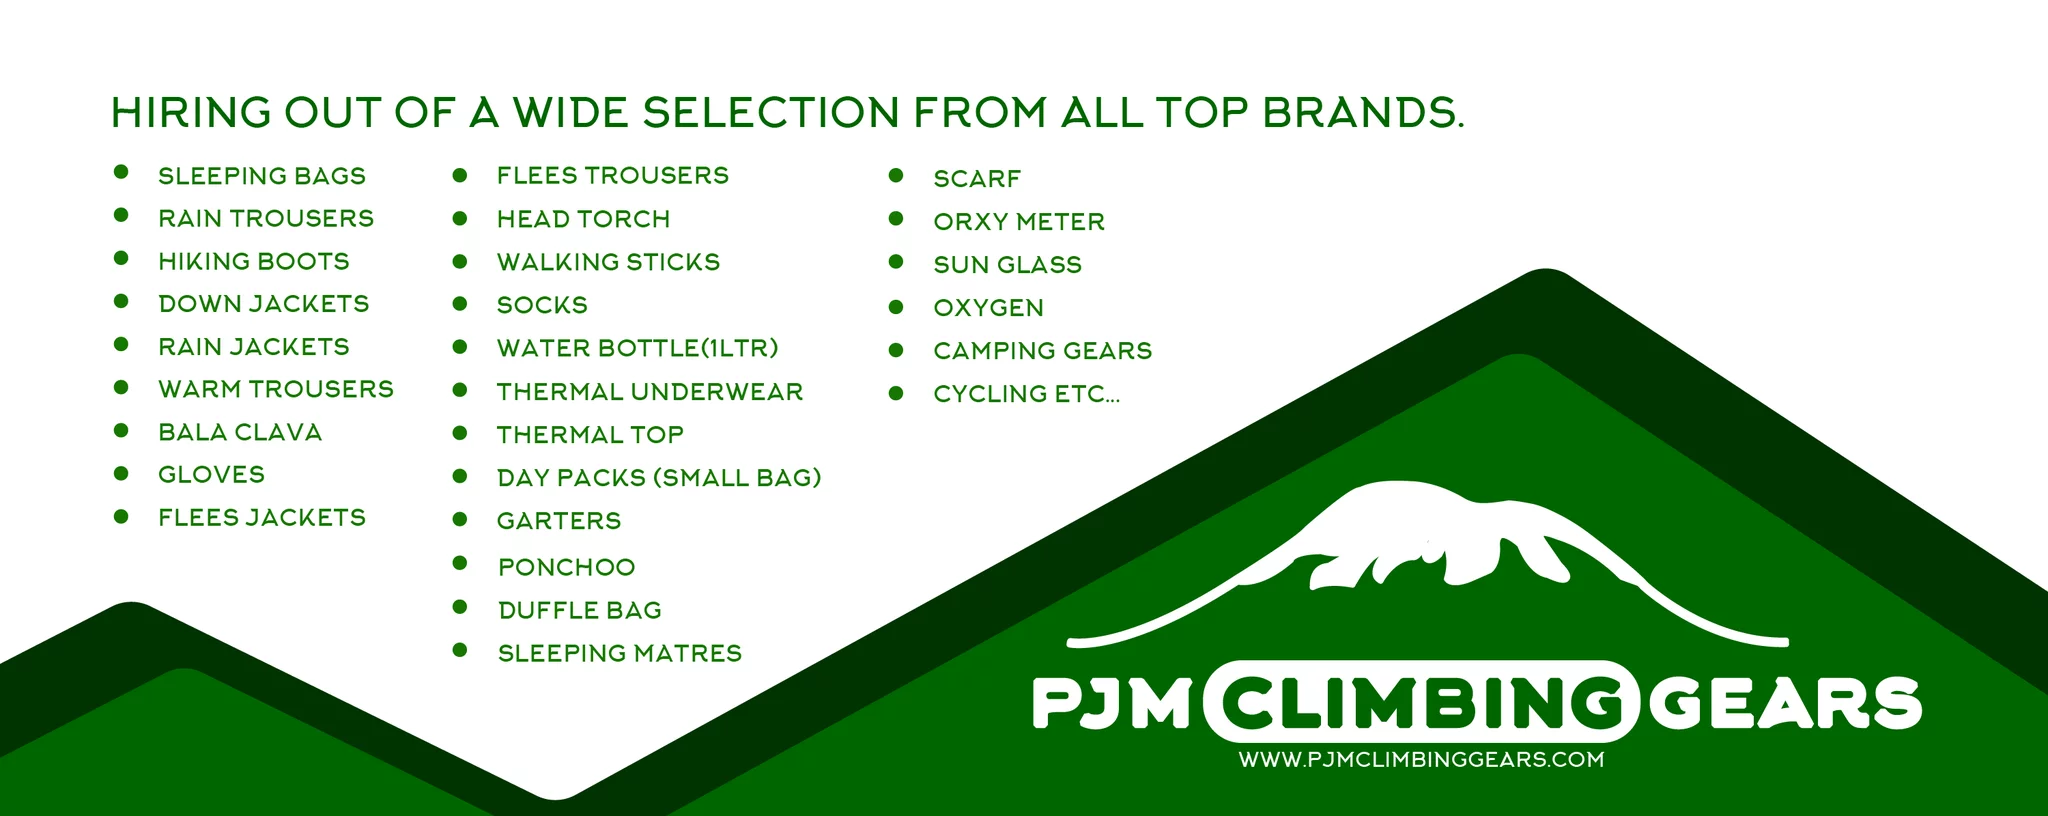 PJM climbing gear logo